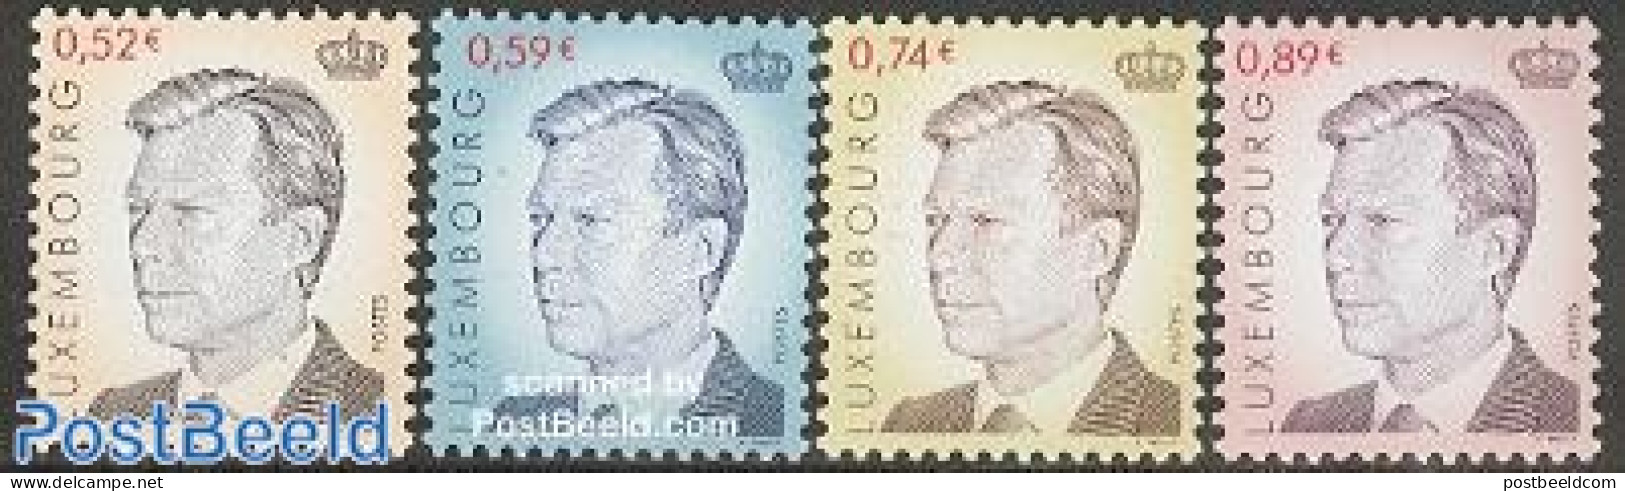 Luxemburg 2002 Definitives 4v, Mint NH - Unused Stamps